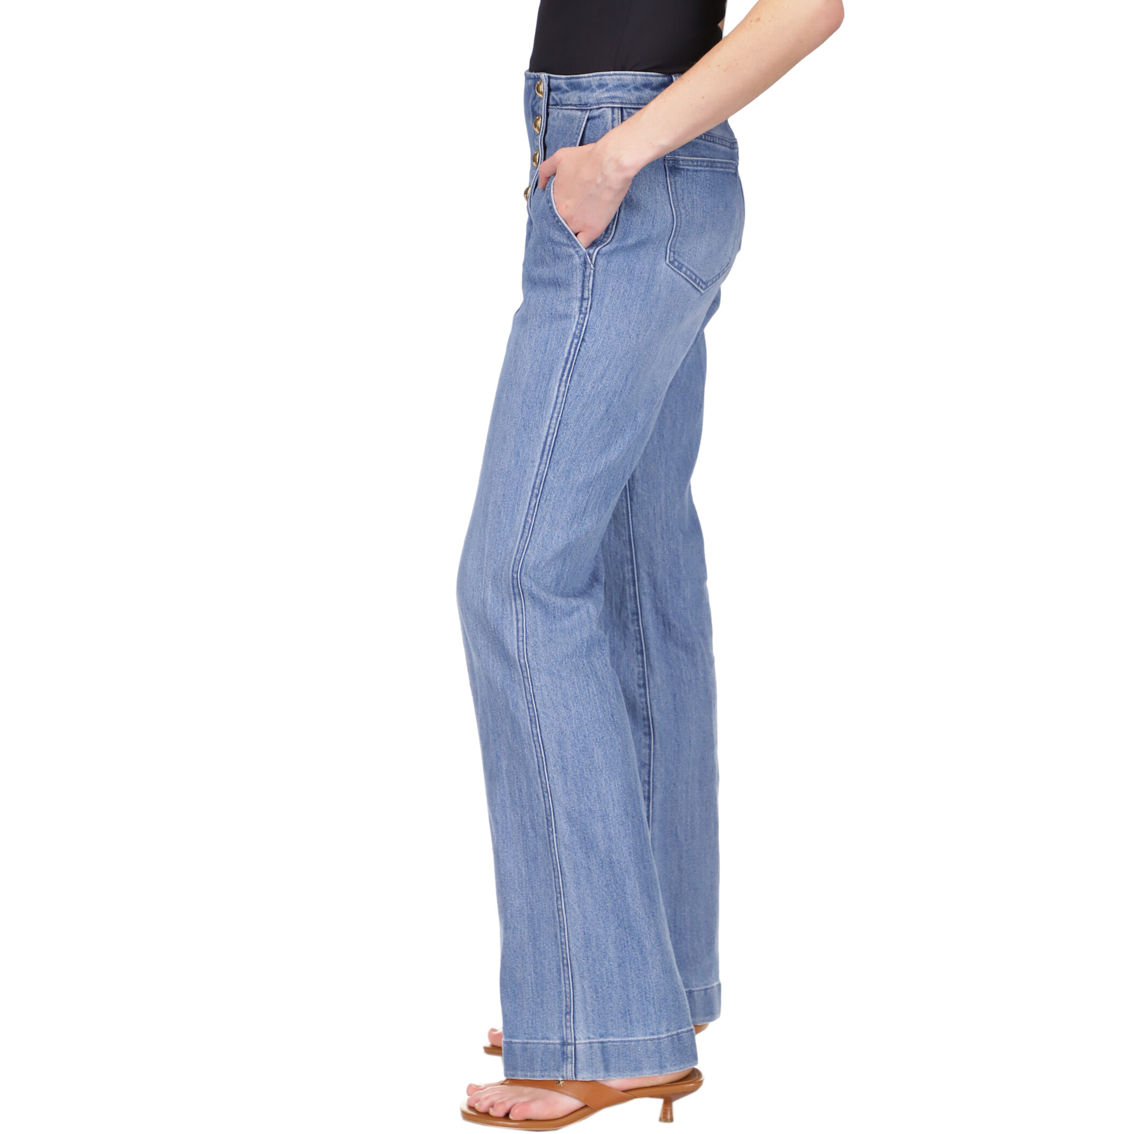 Michael Kors Cropped Kick Sailor Jeans - Image 3 of 4